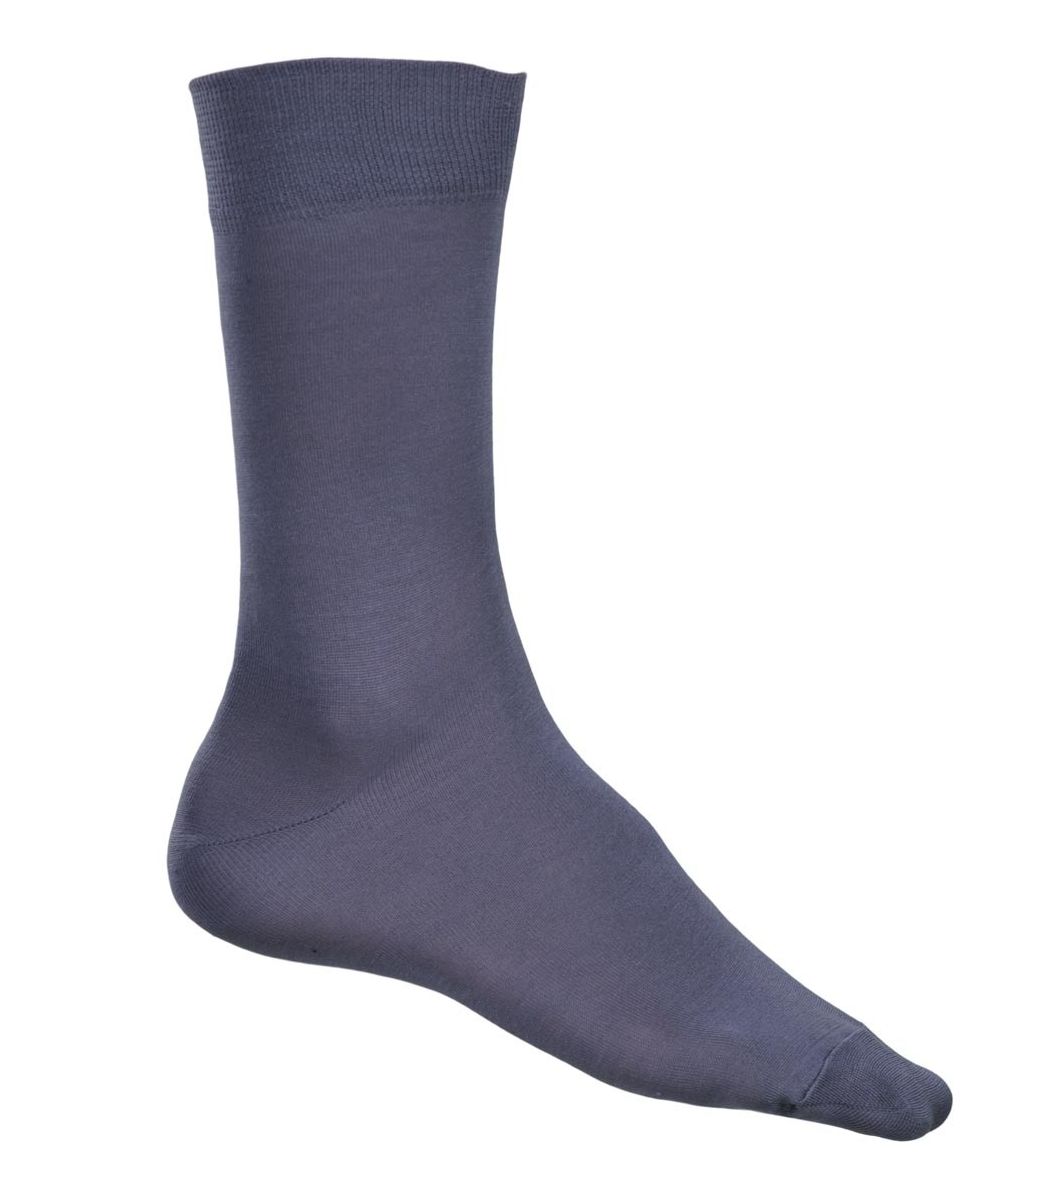 Cotton Socks, Shine, grey